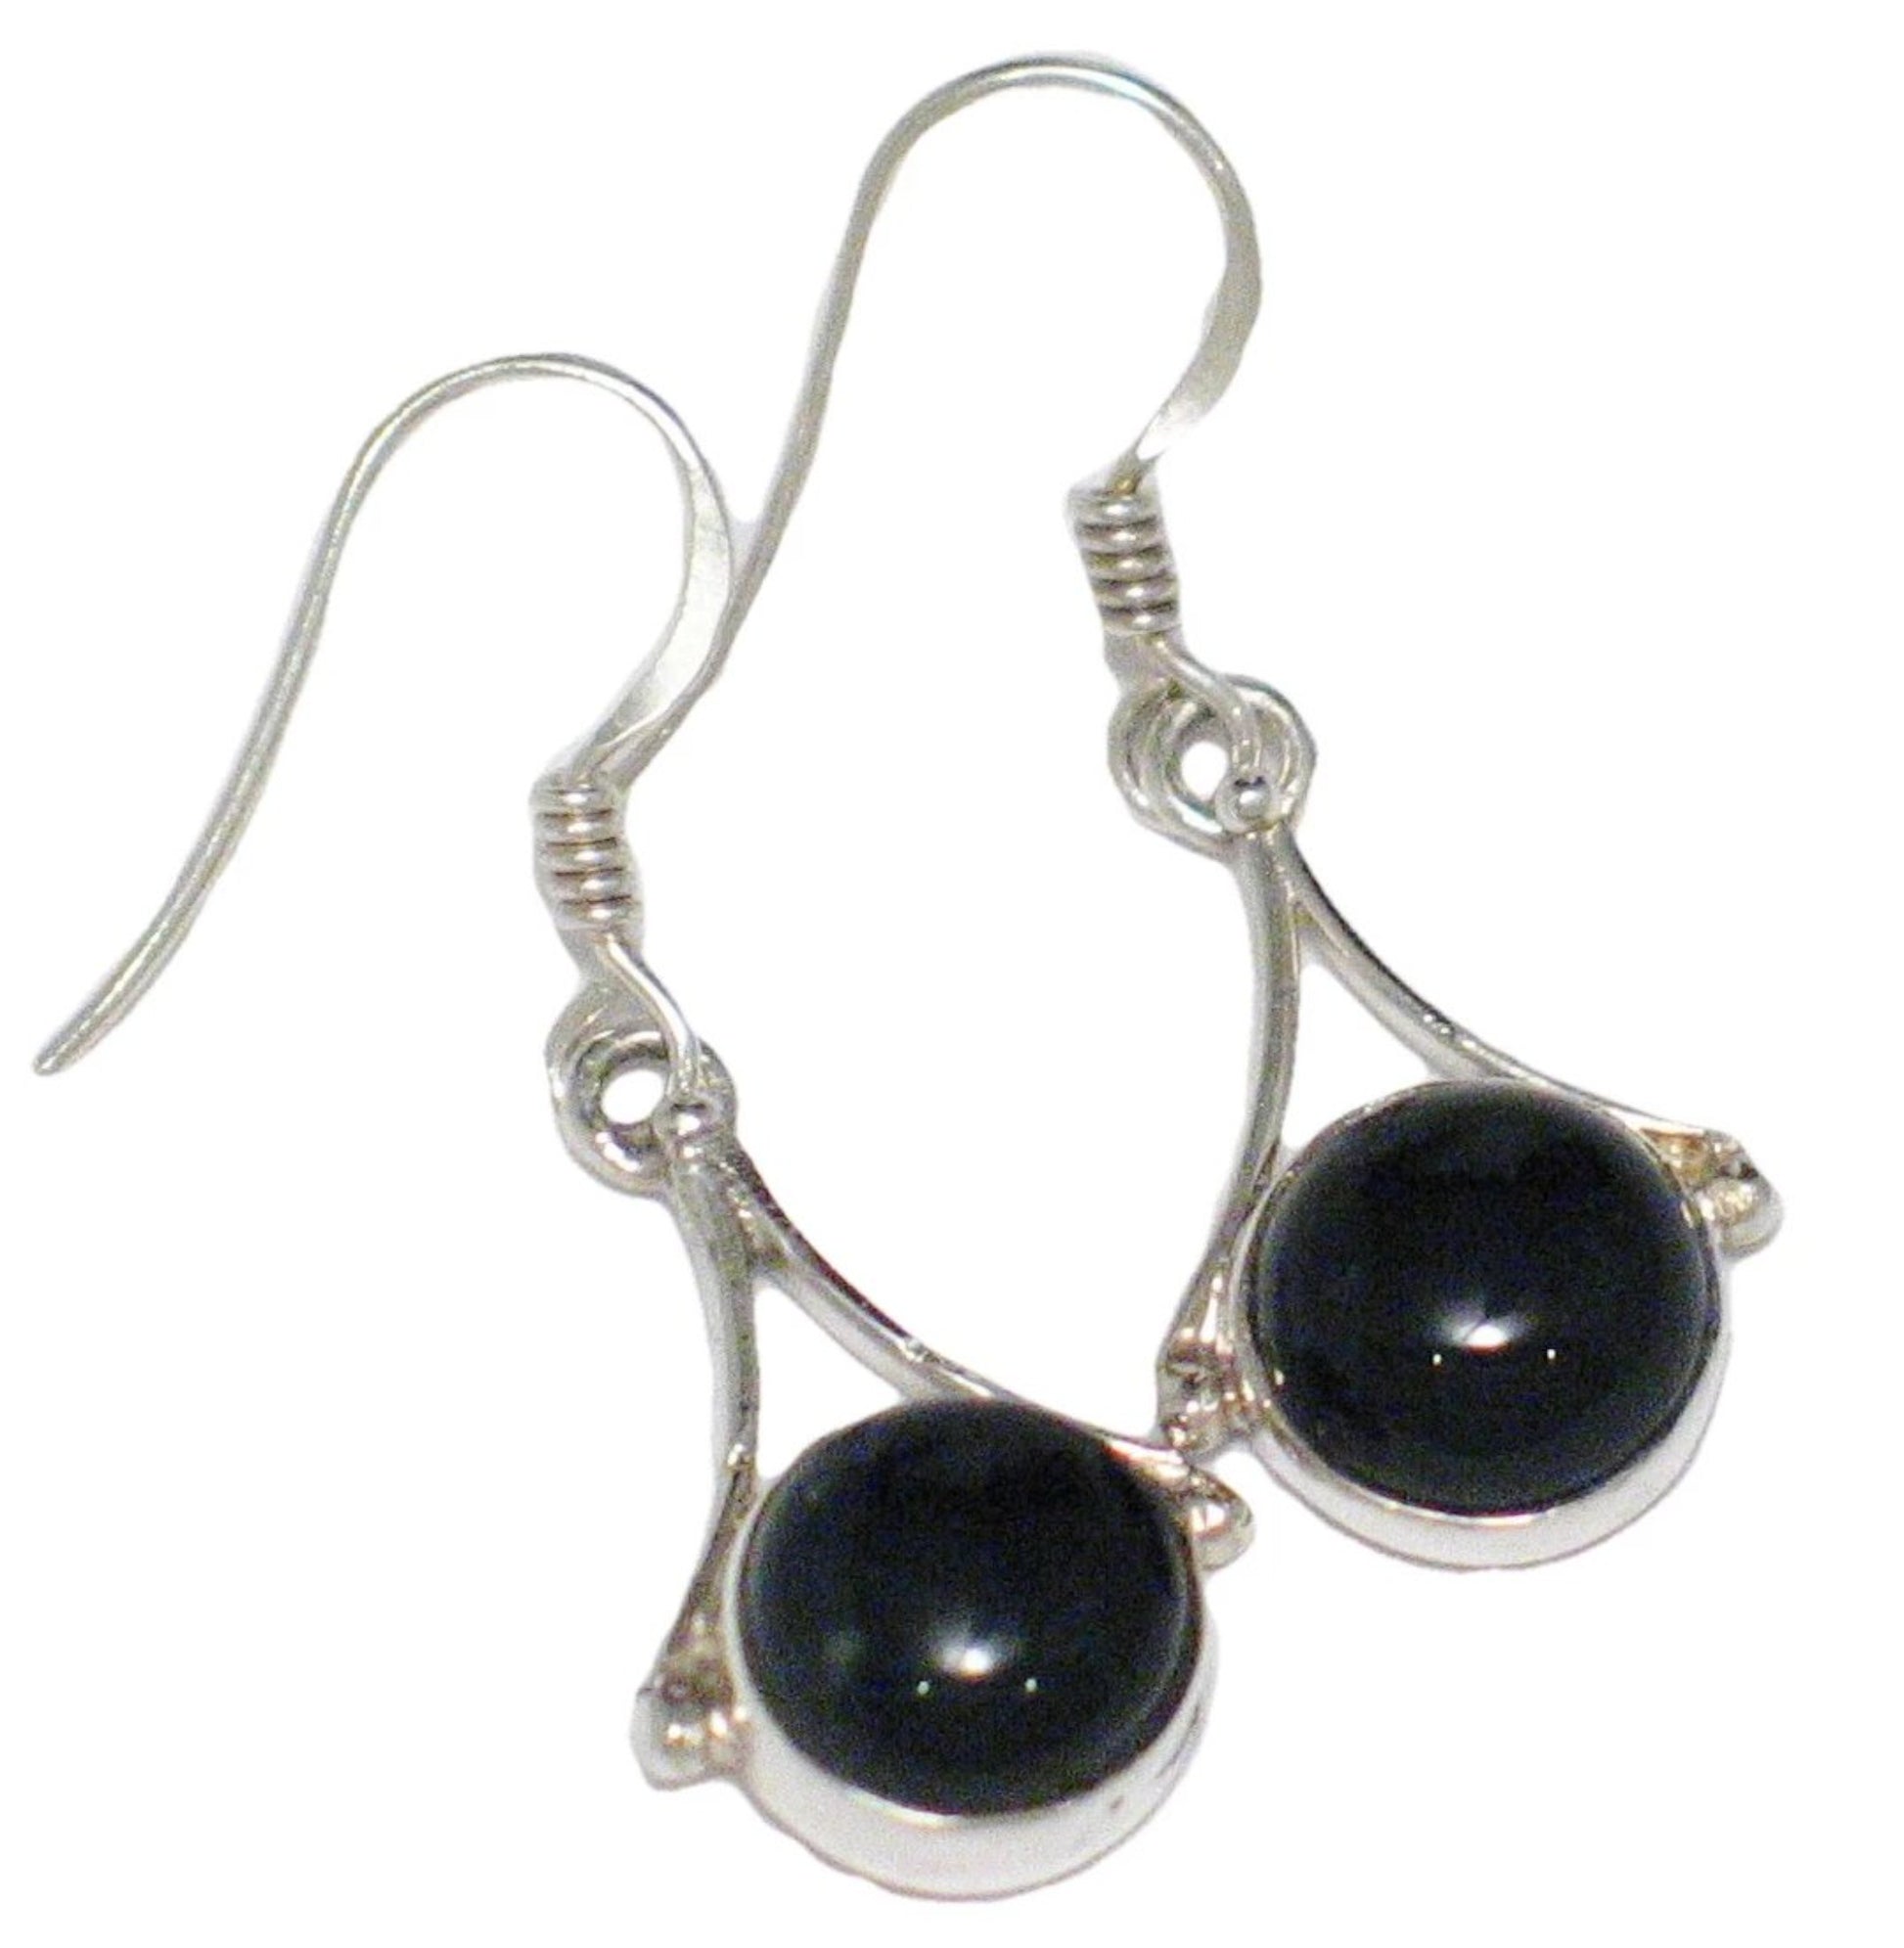 Discount Jewelry | Sterling Silver Black Onyx Stone Circle Dangle Earrings - Blingschlingers Jewelry